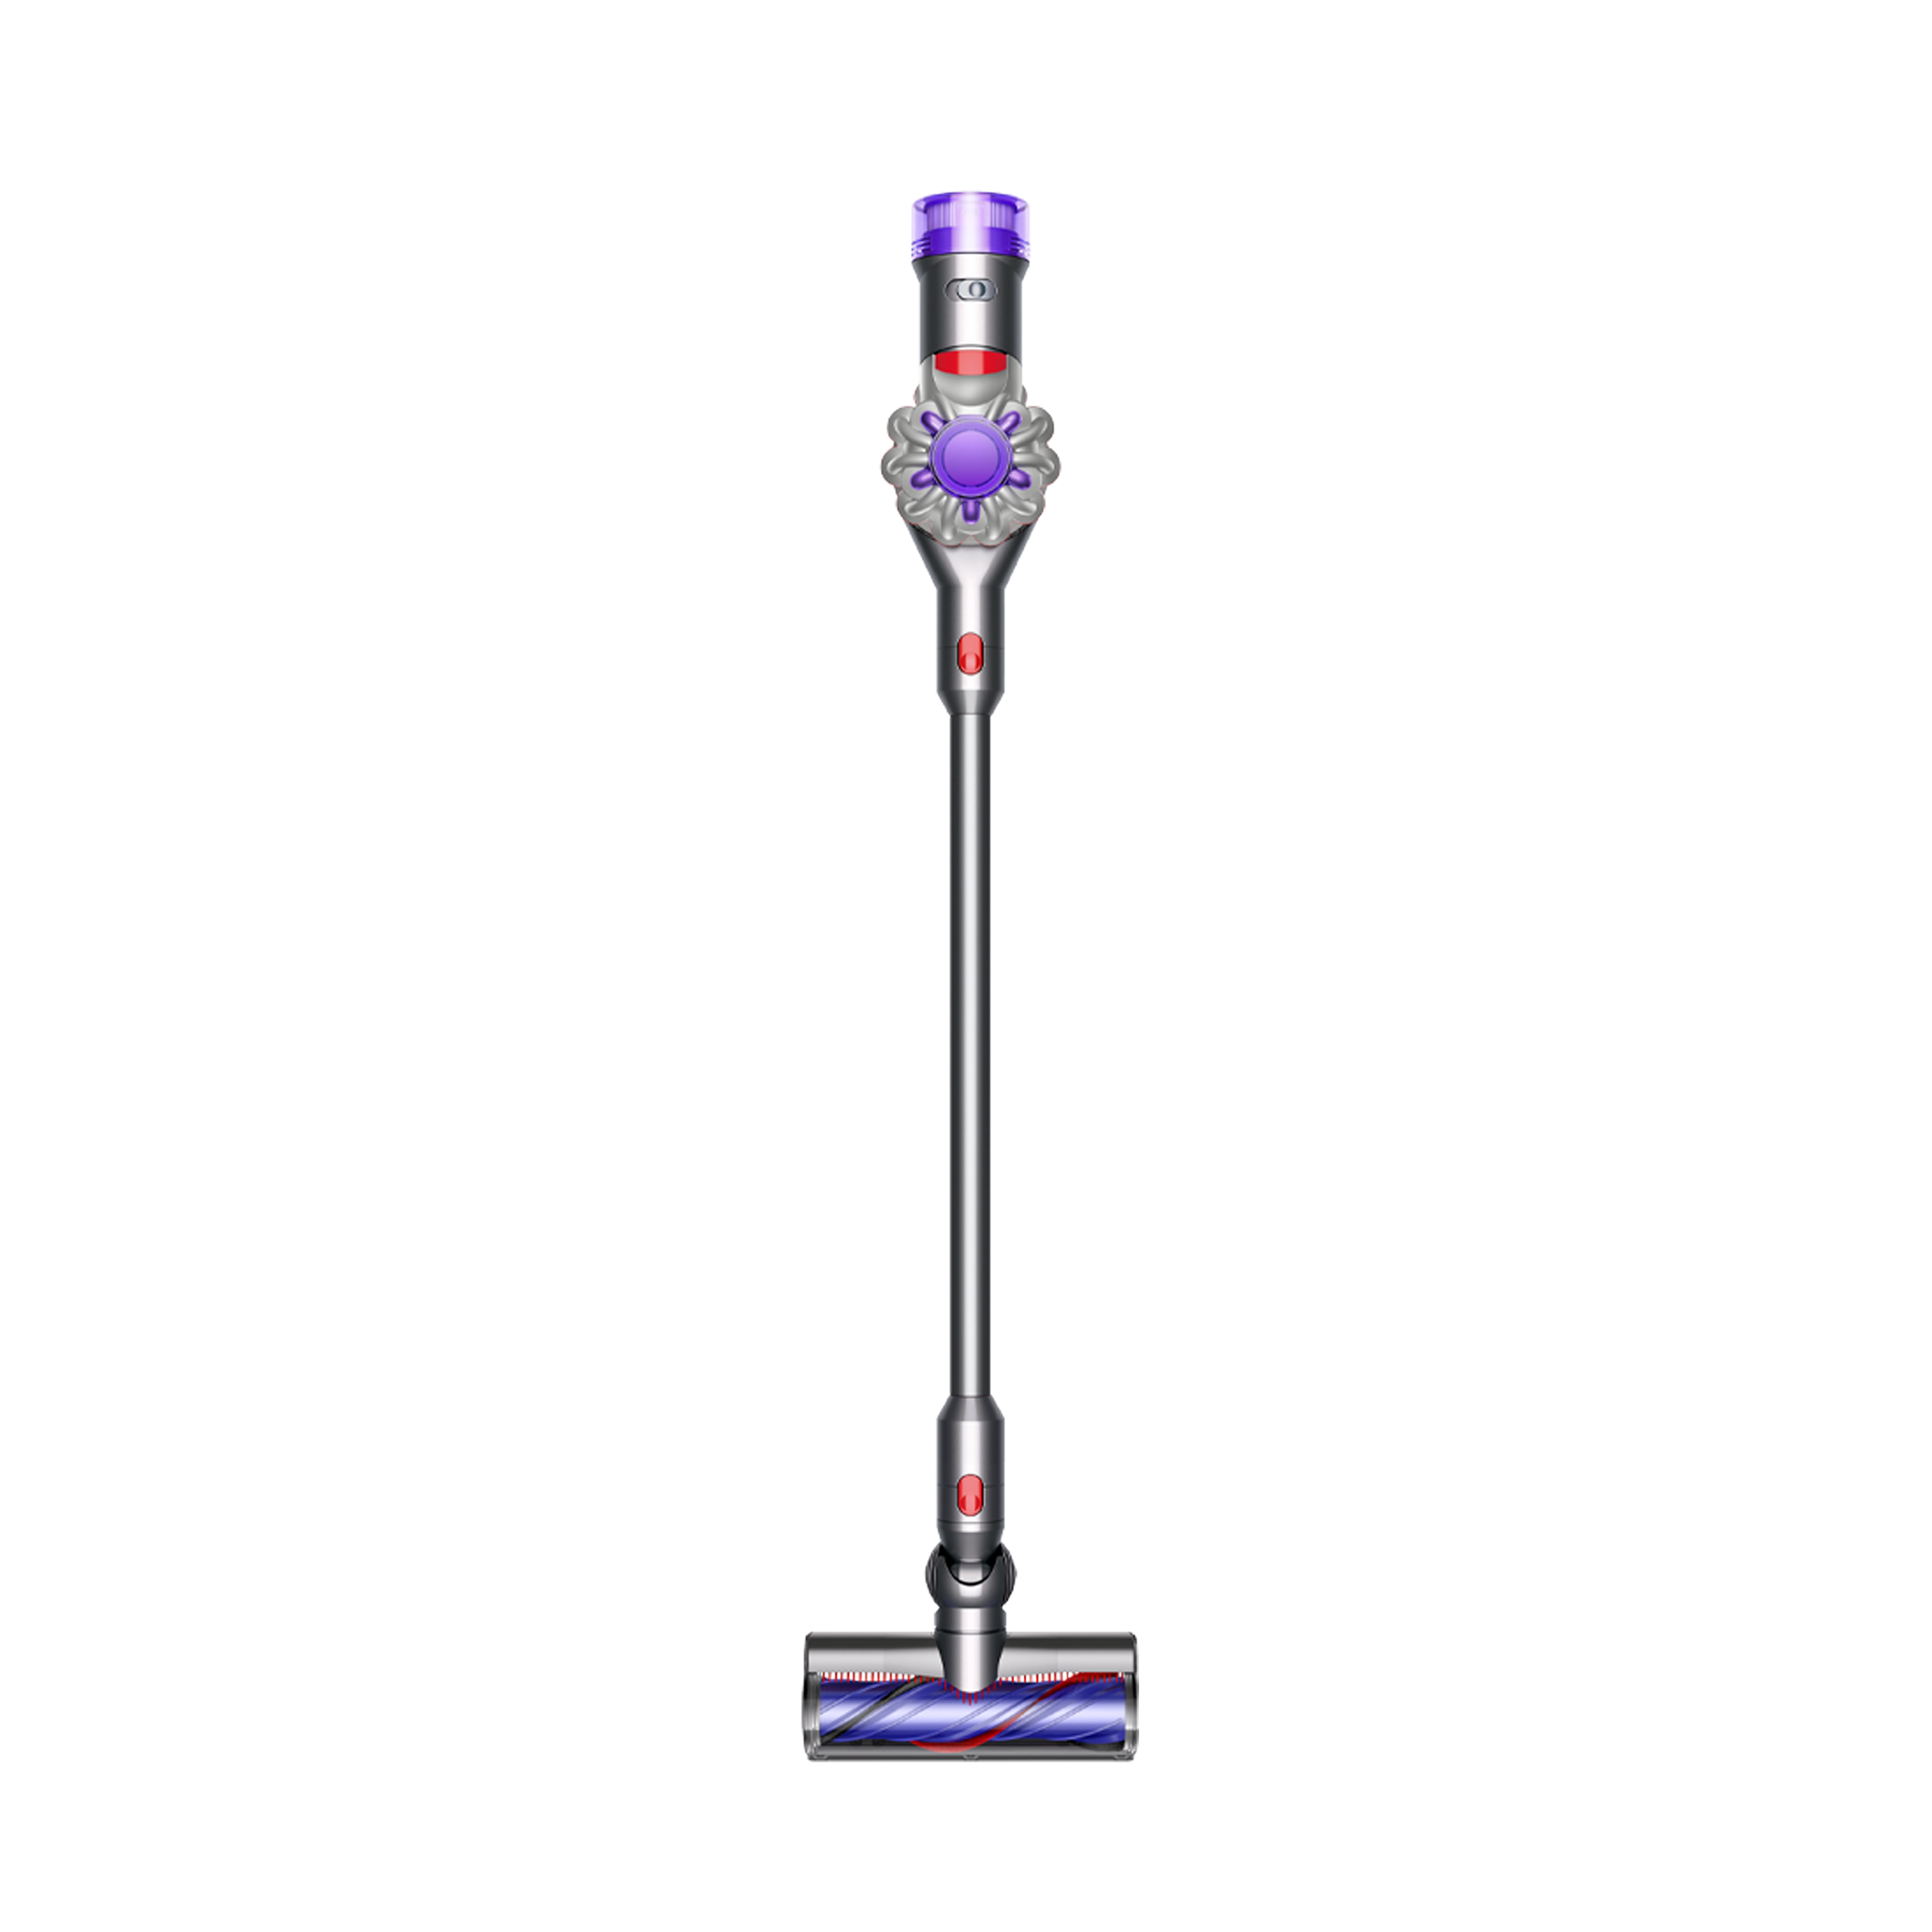 V8 | Cordless vacuum cleaner